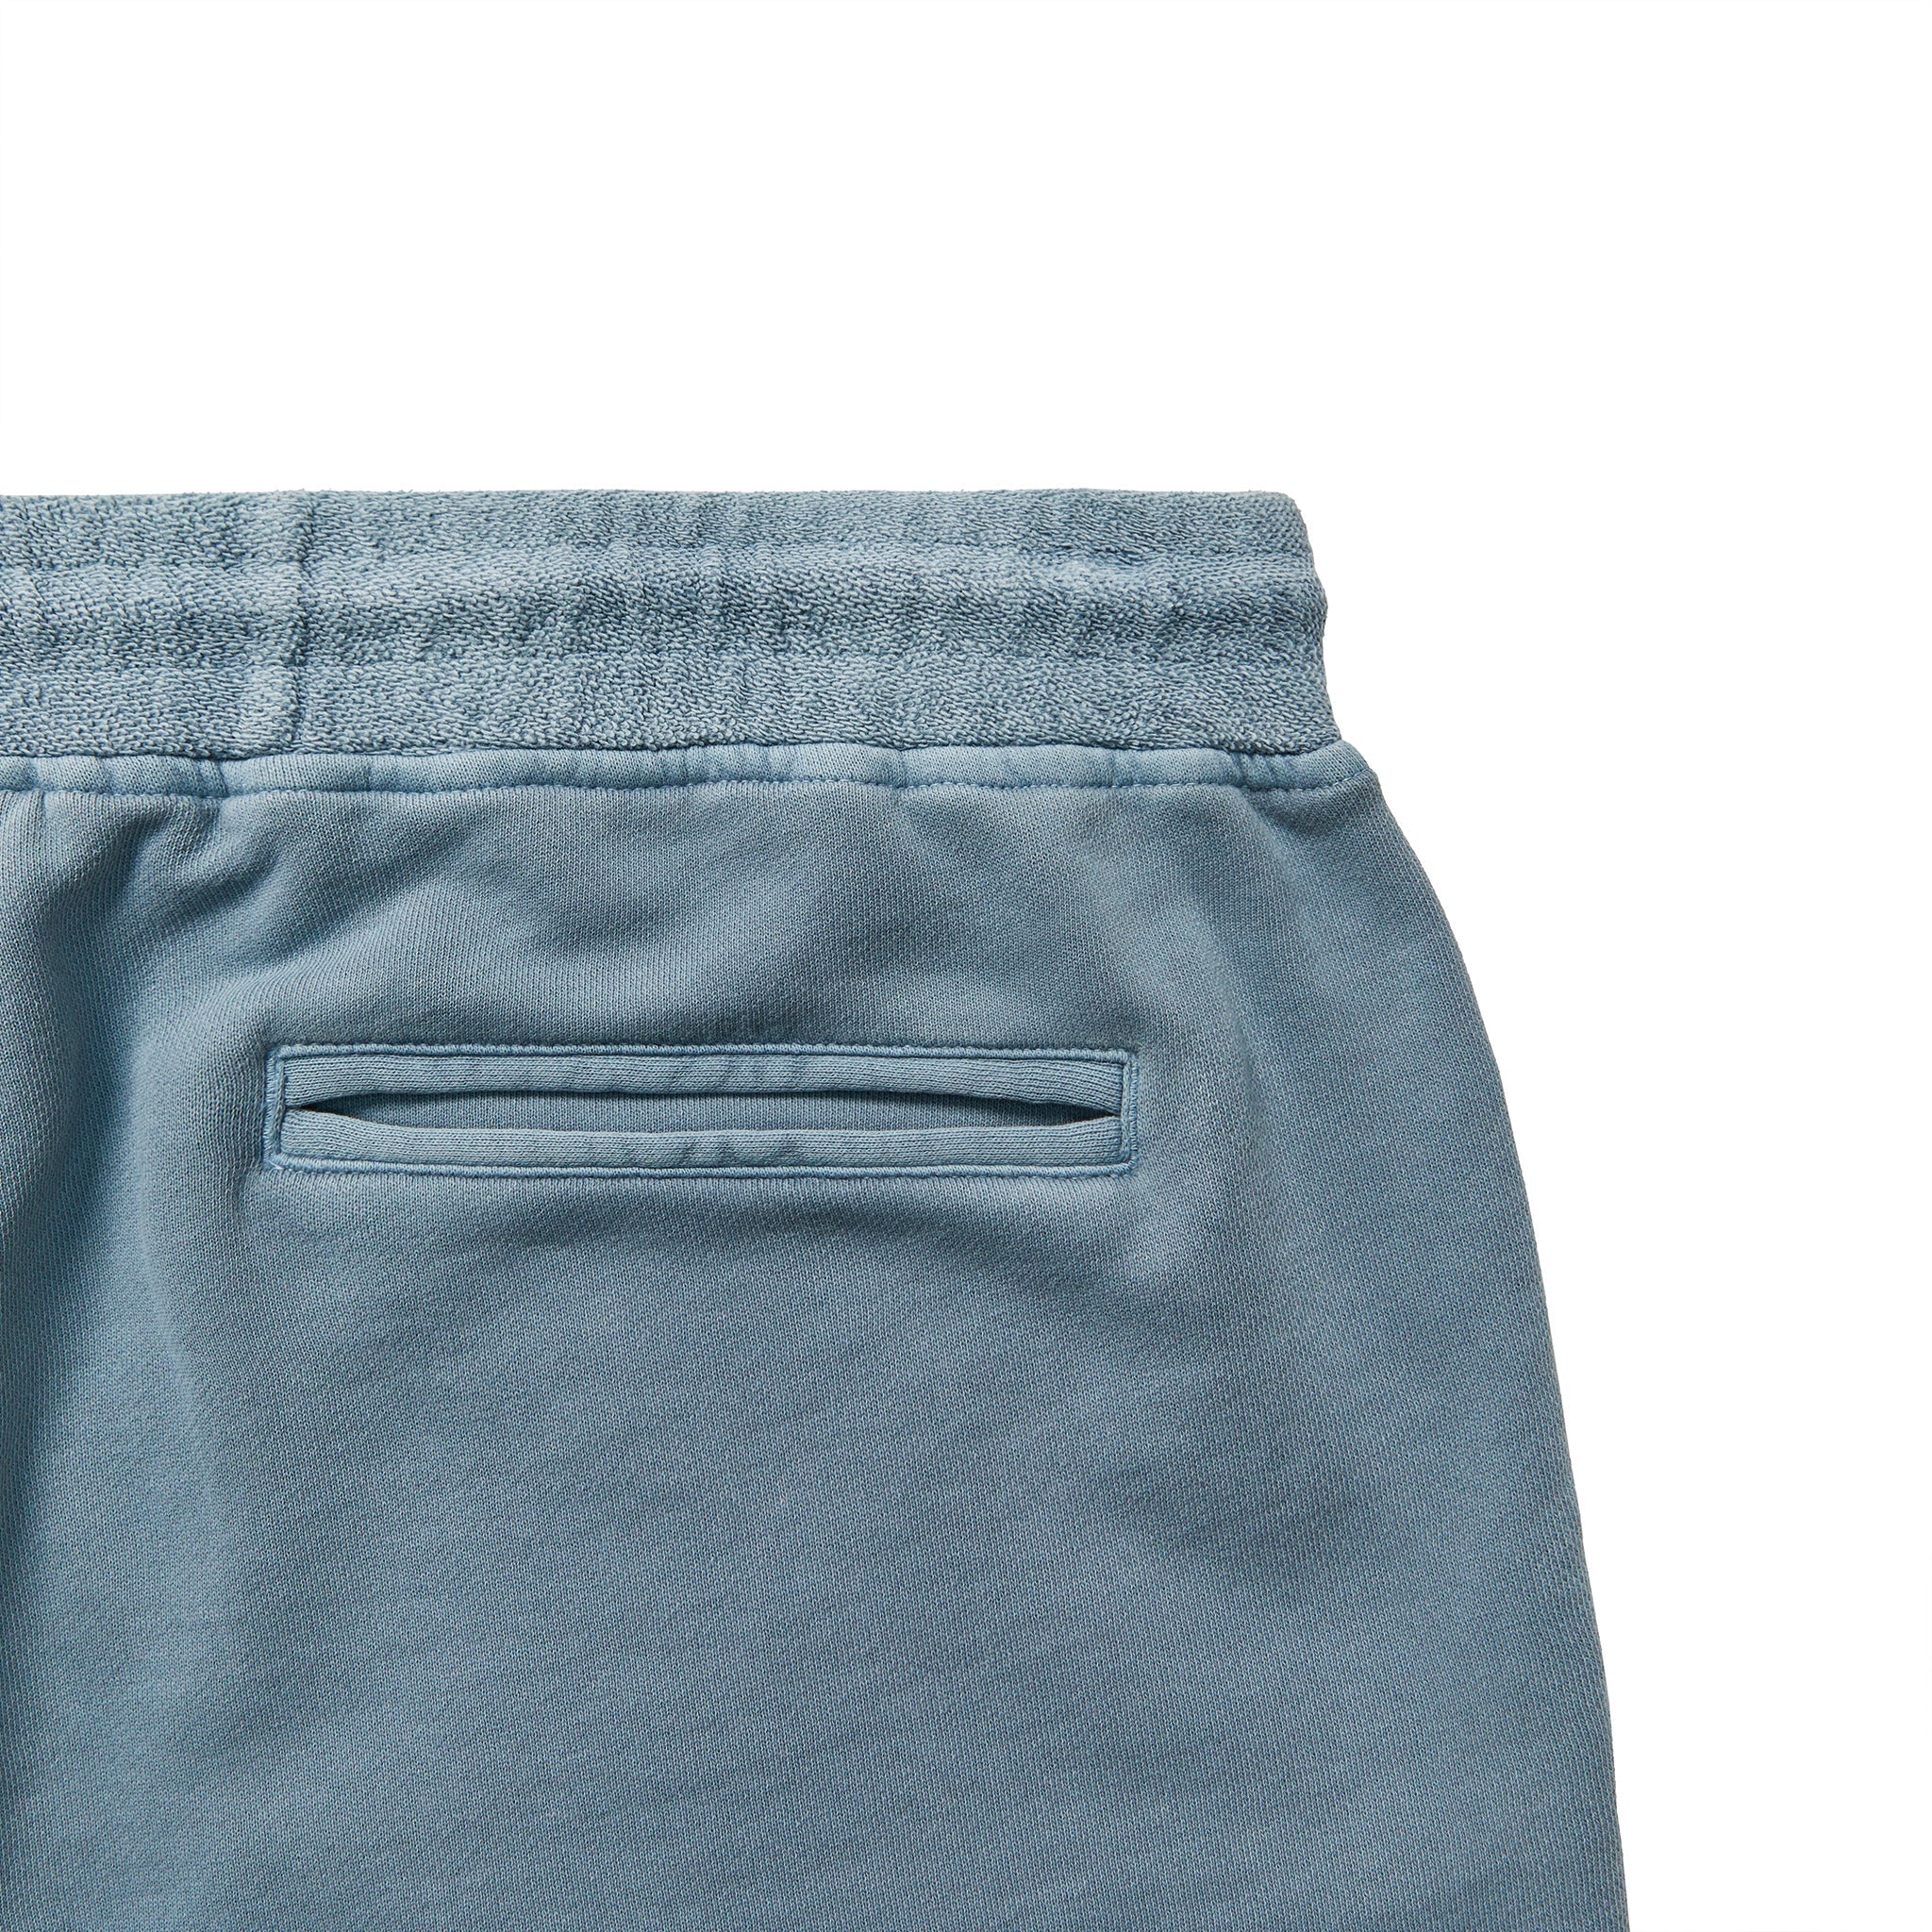 SLAM Over Dyed Shorts - SLAM Goods